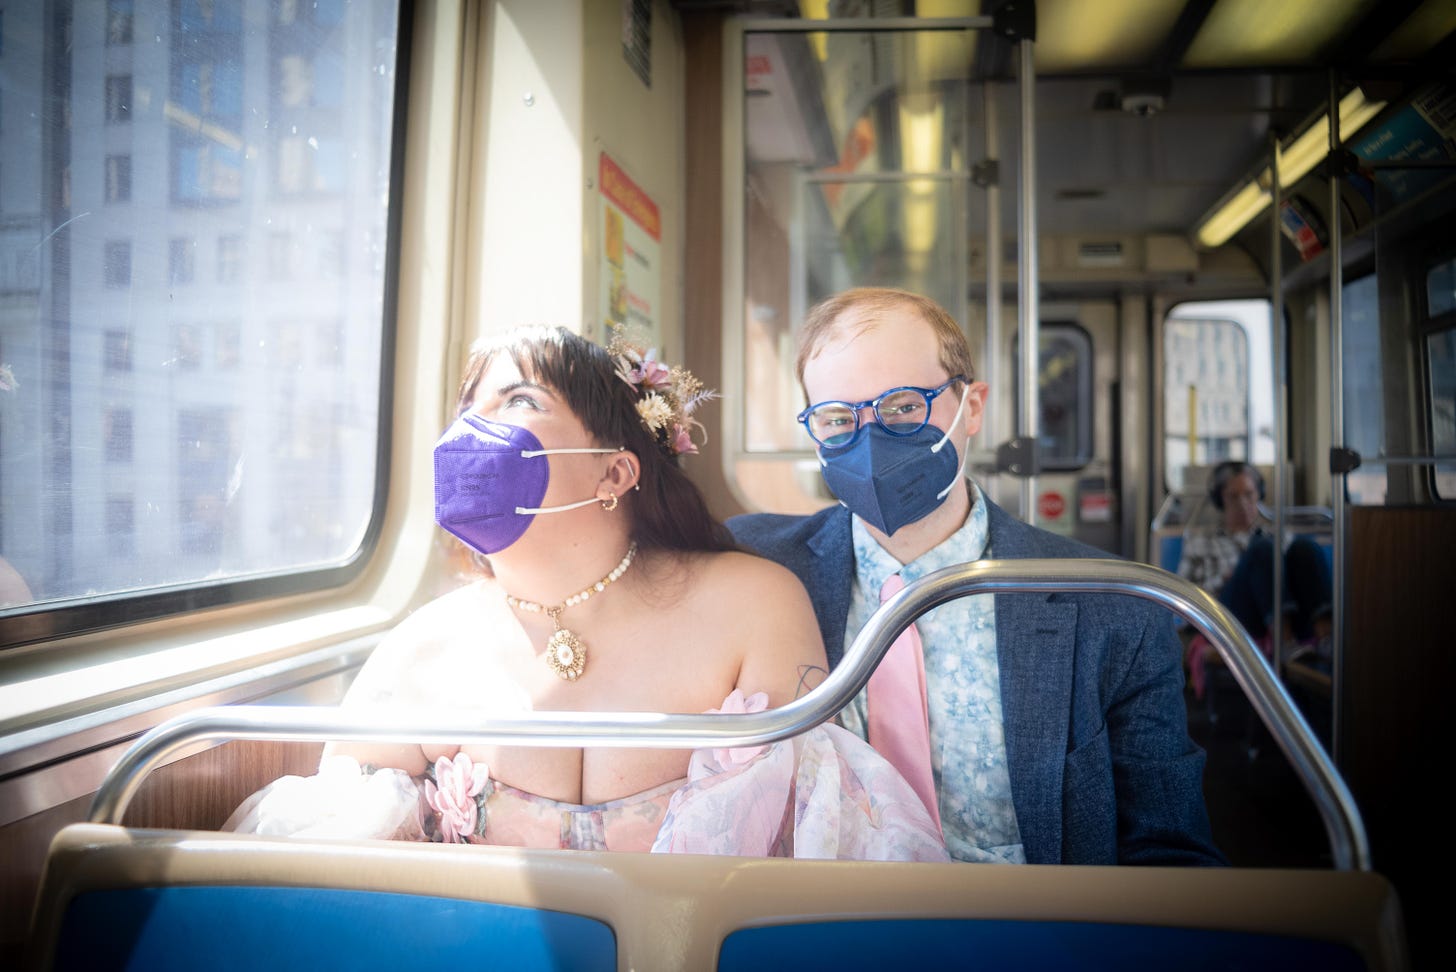 Daniella and Joe where their wedding garb and face masks while riding the Chicago El.